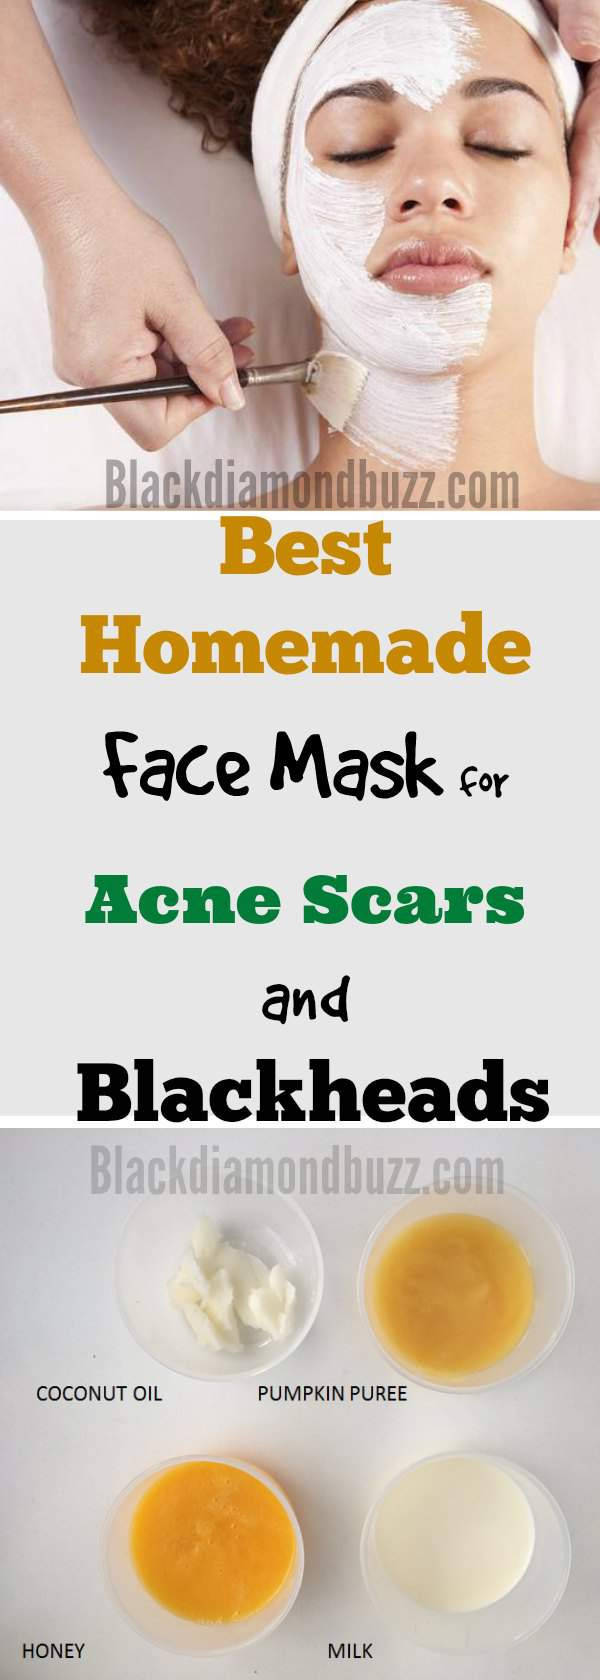 Acne DIY Face Mask
 DIY Face Mask for Acne 7 Best Homemade Face Masks